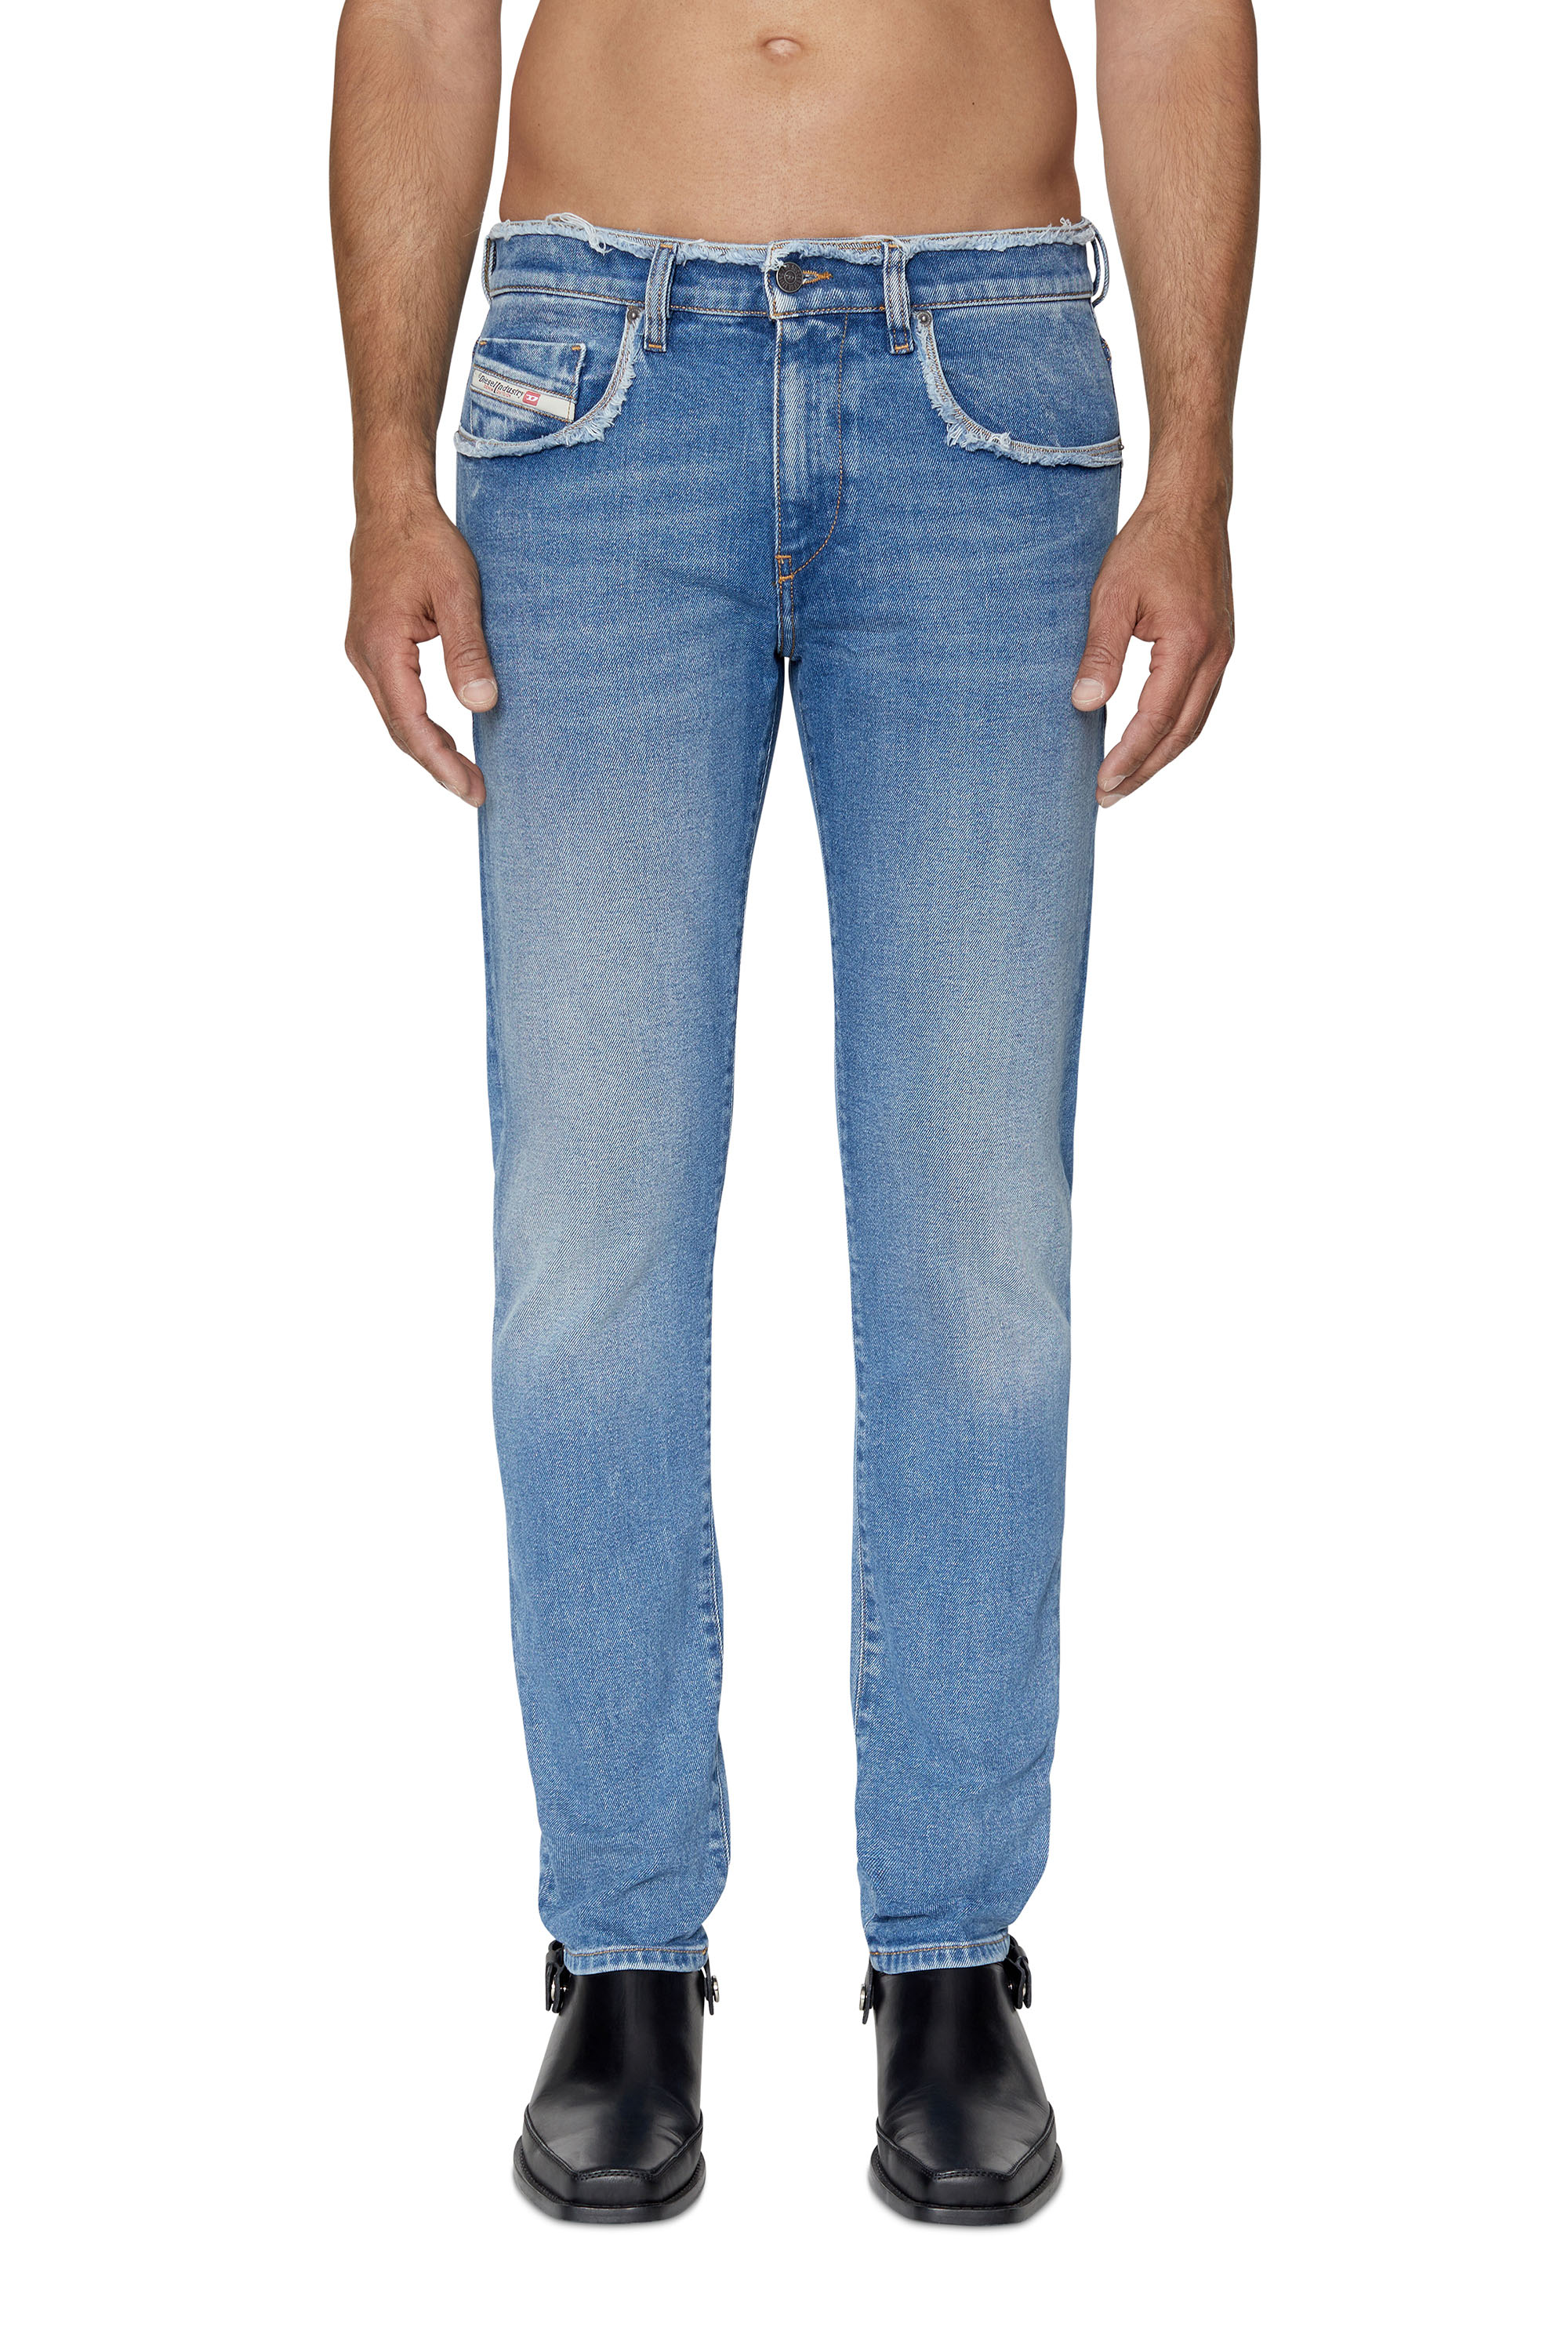 2019 D-STRUKT 09E19 Slim Jeans, Medium blue - Jeans